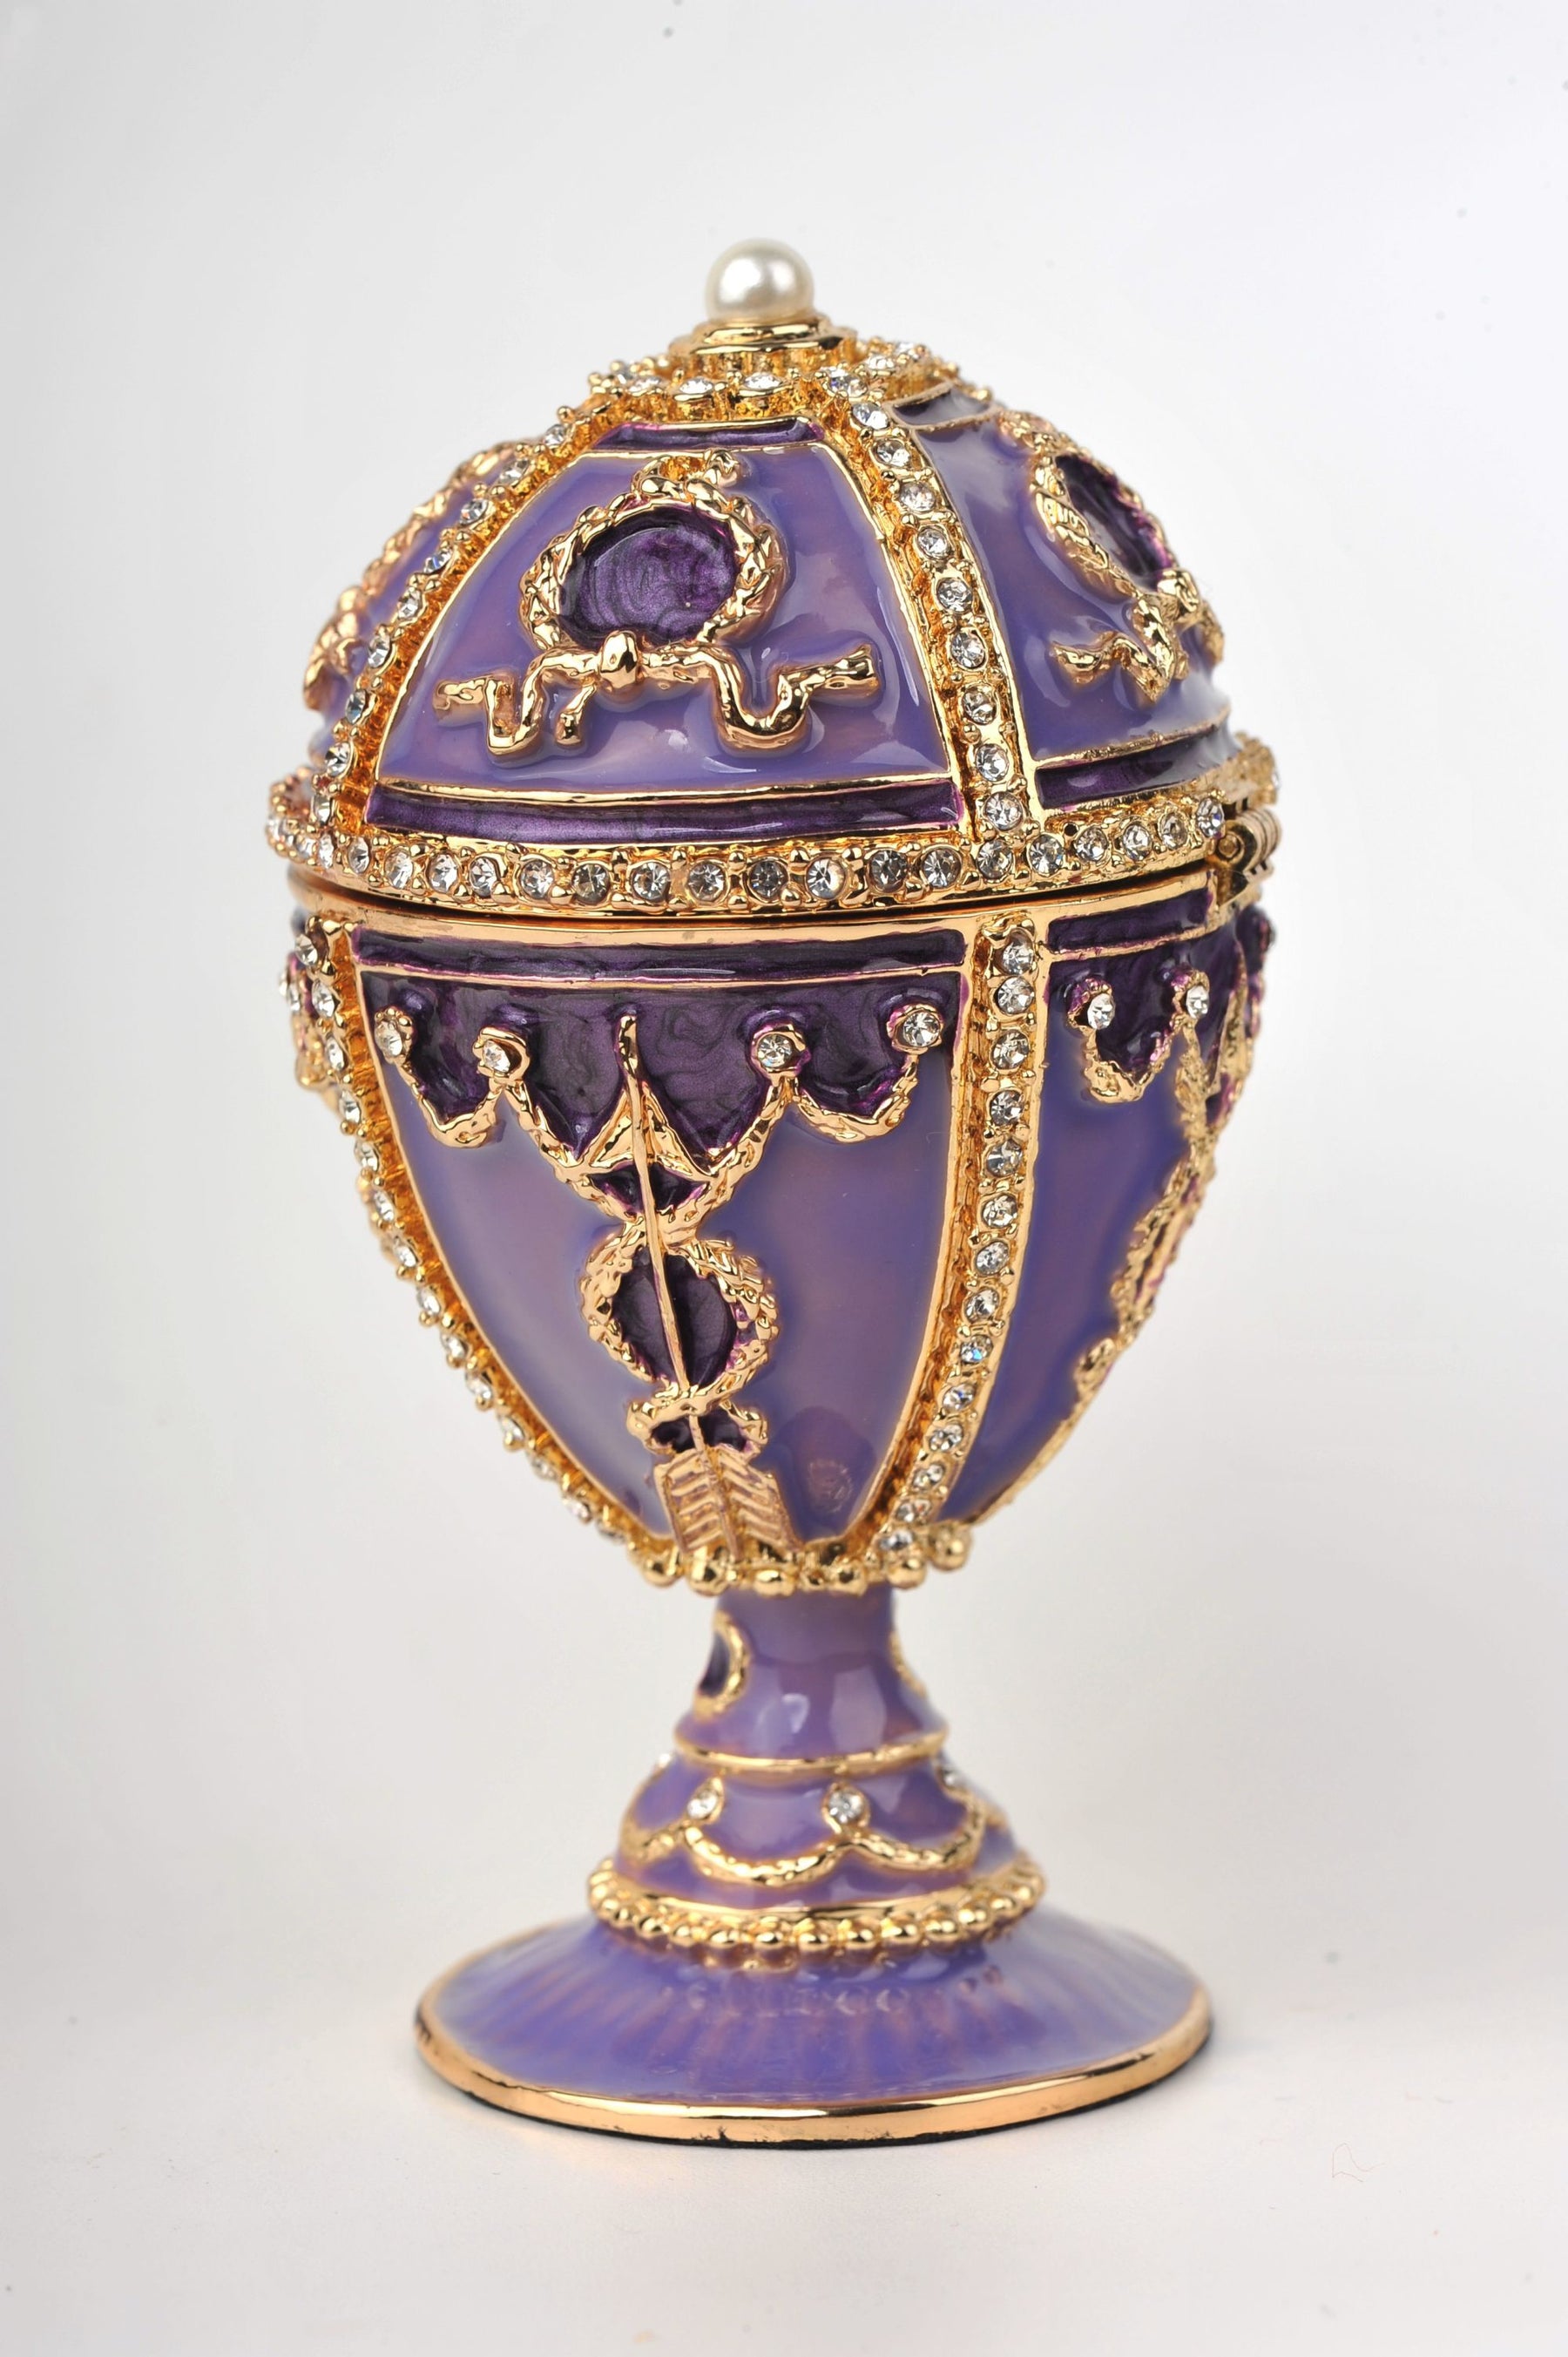 Keren Kopal Purple Faberge Egg with Pearl on top  72.00